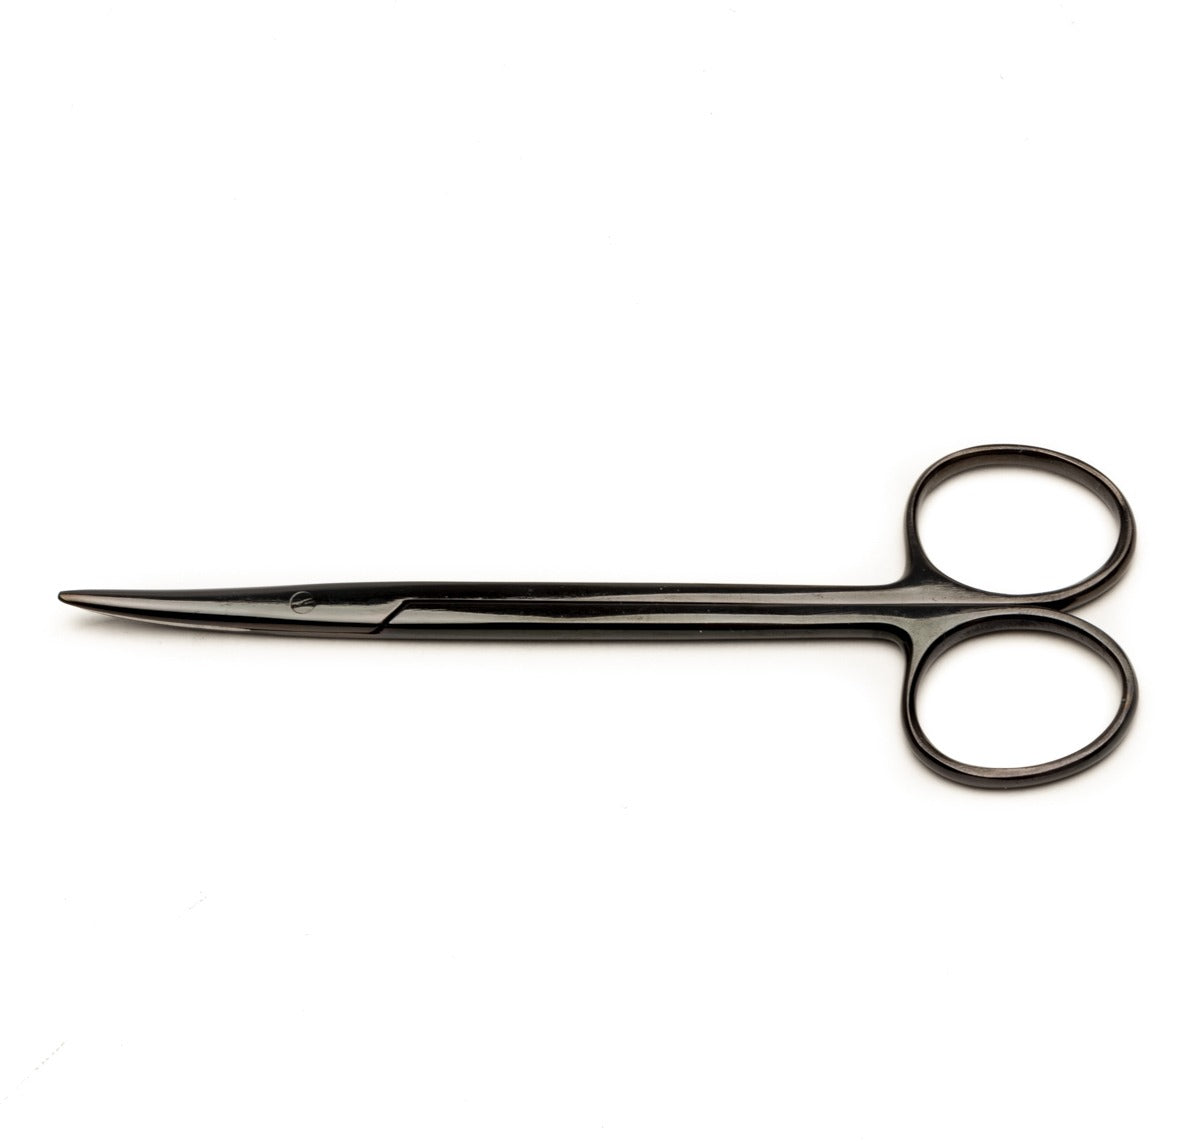 Starbismus scissors, 12 cm, Curved, Black, Round Tips